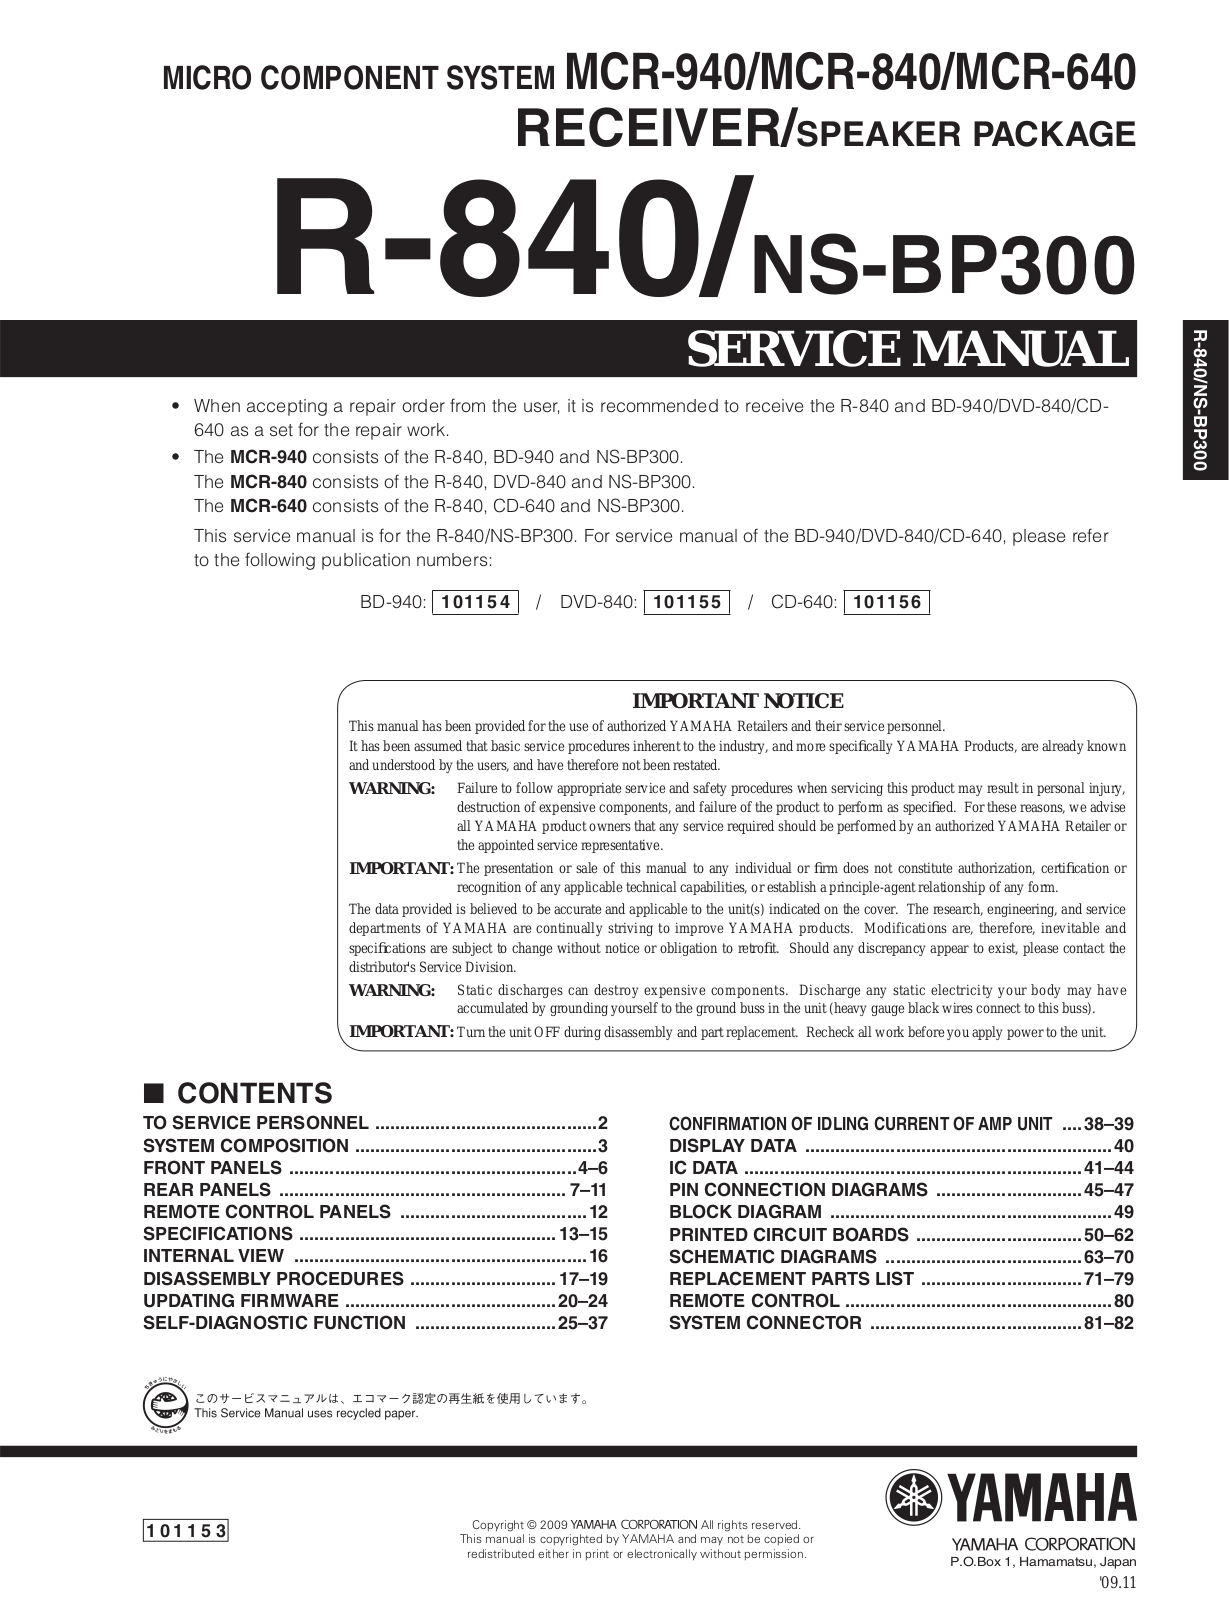 Yamaha R-840 Service Manual